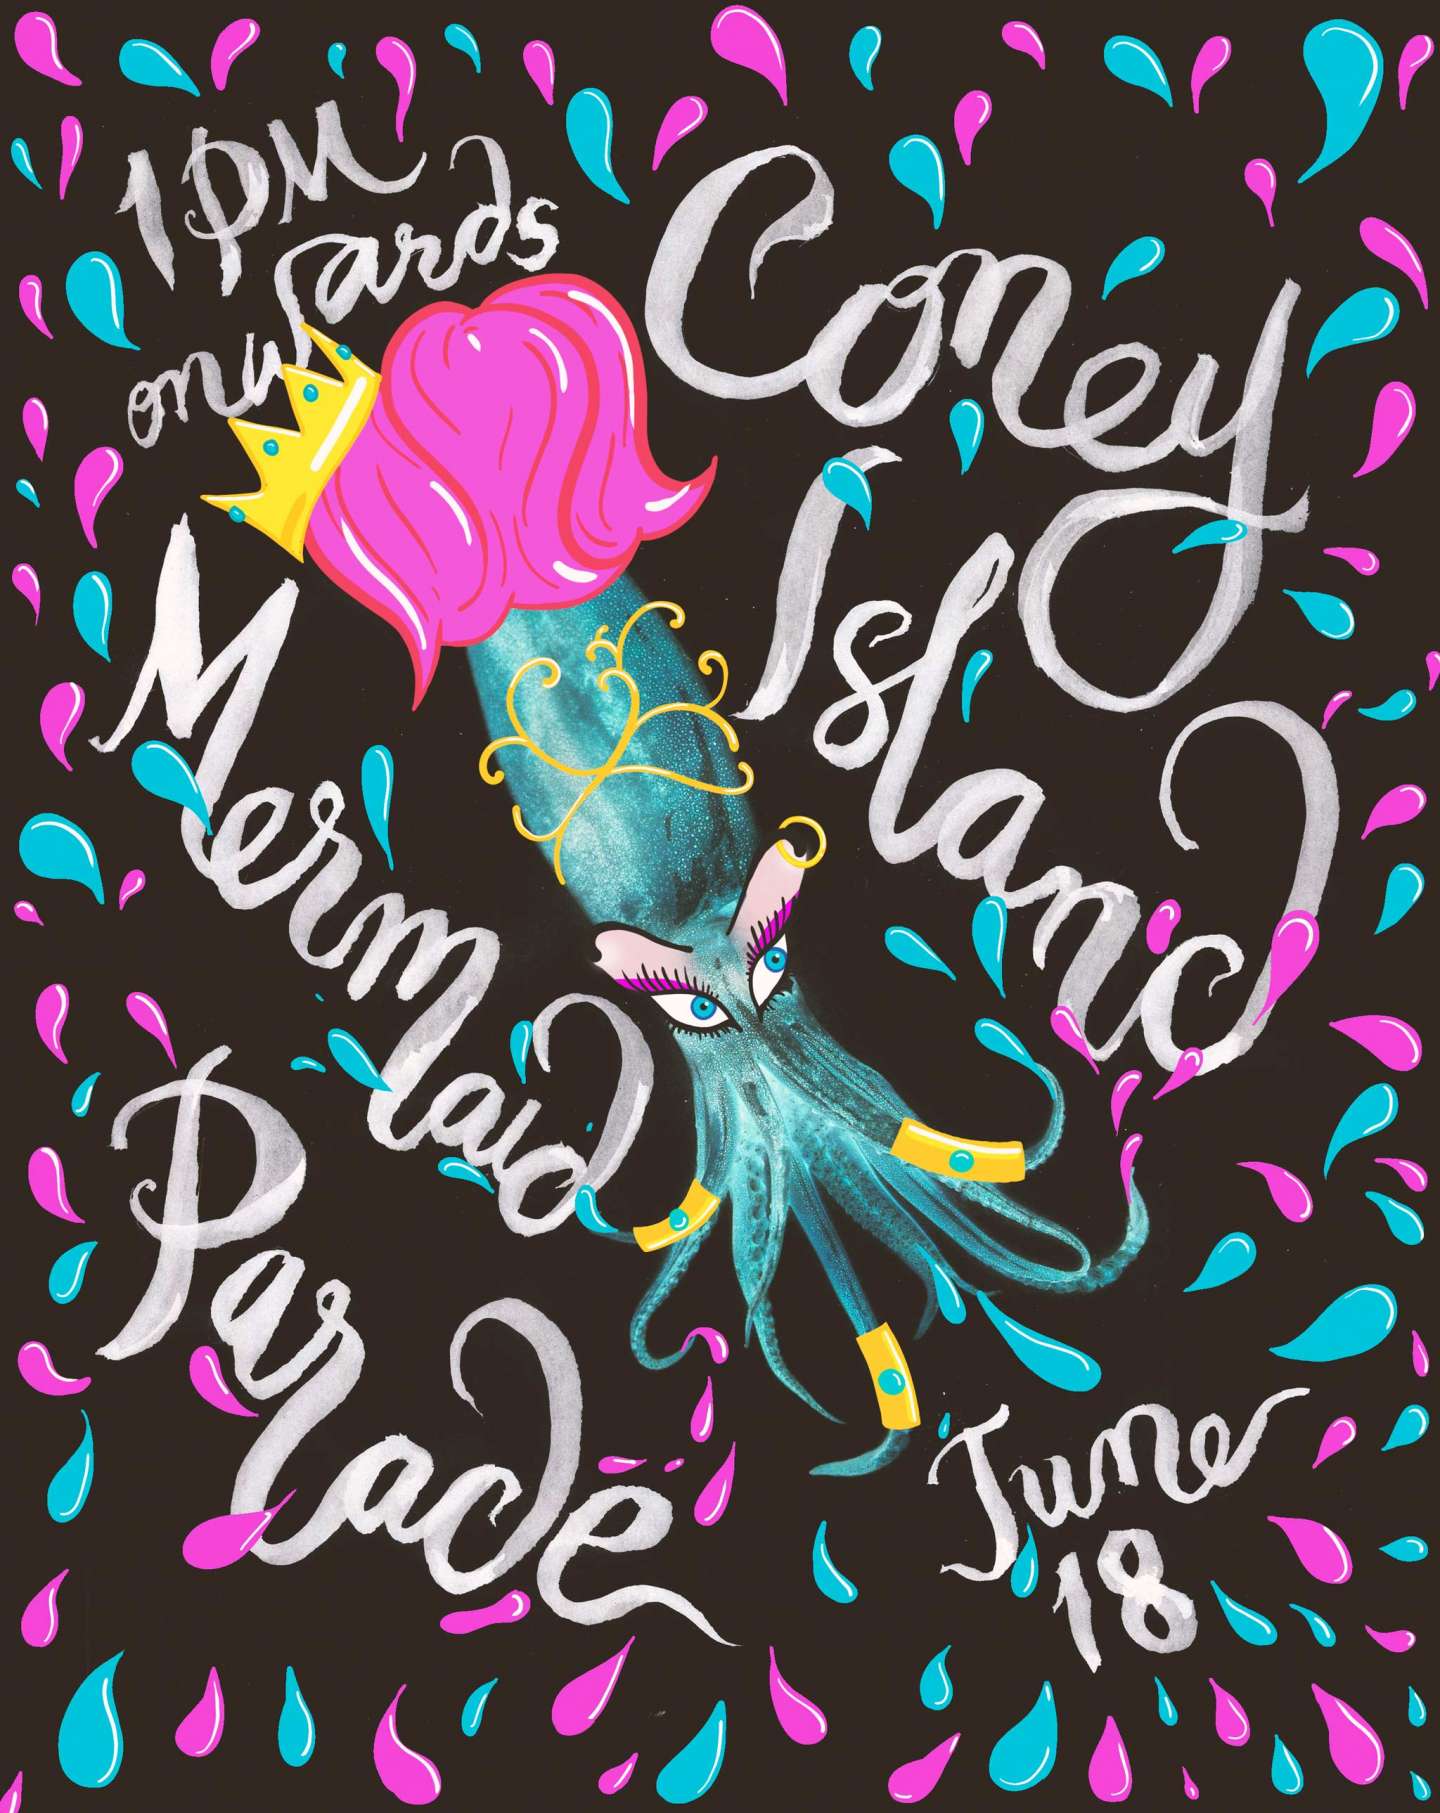 Coney Island Mermaid Parade Posters